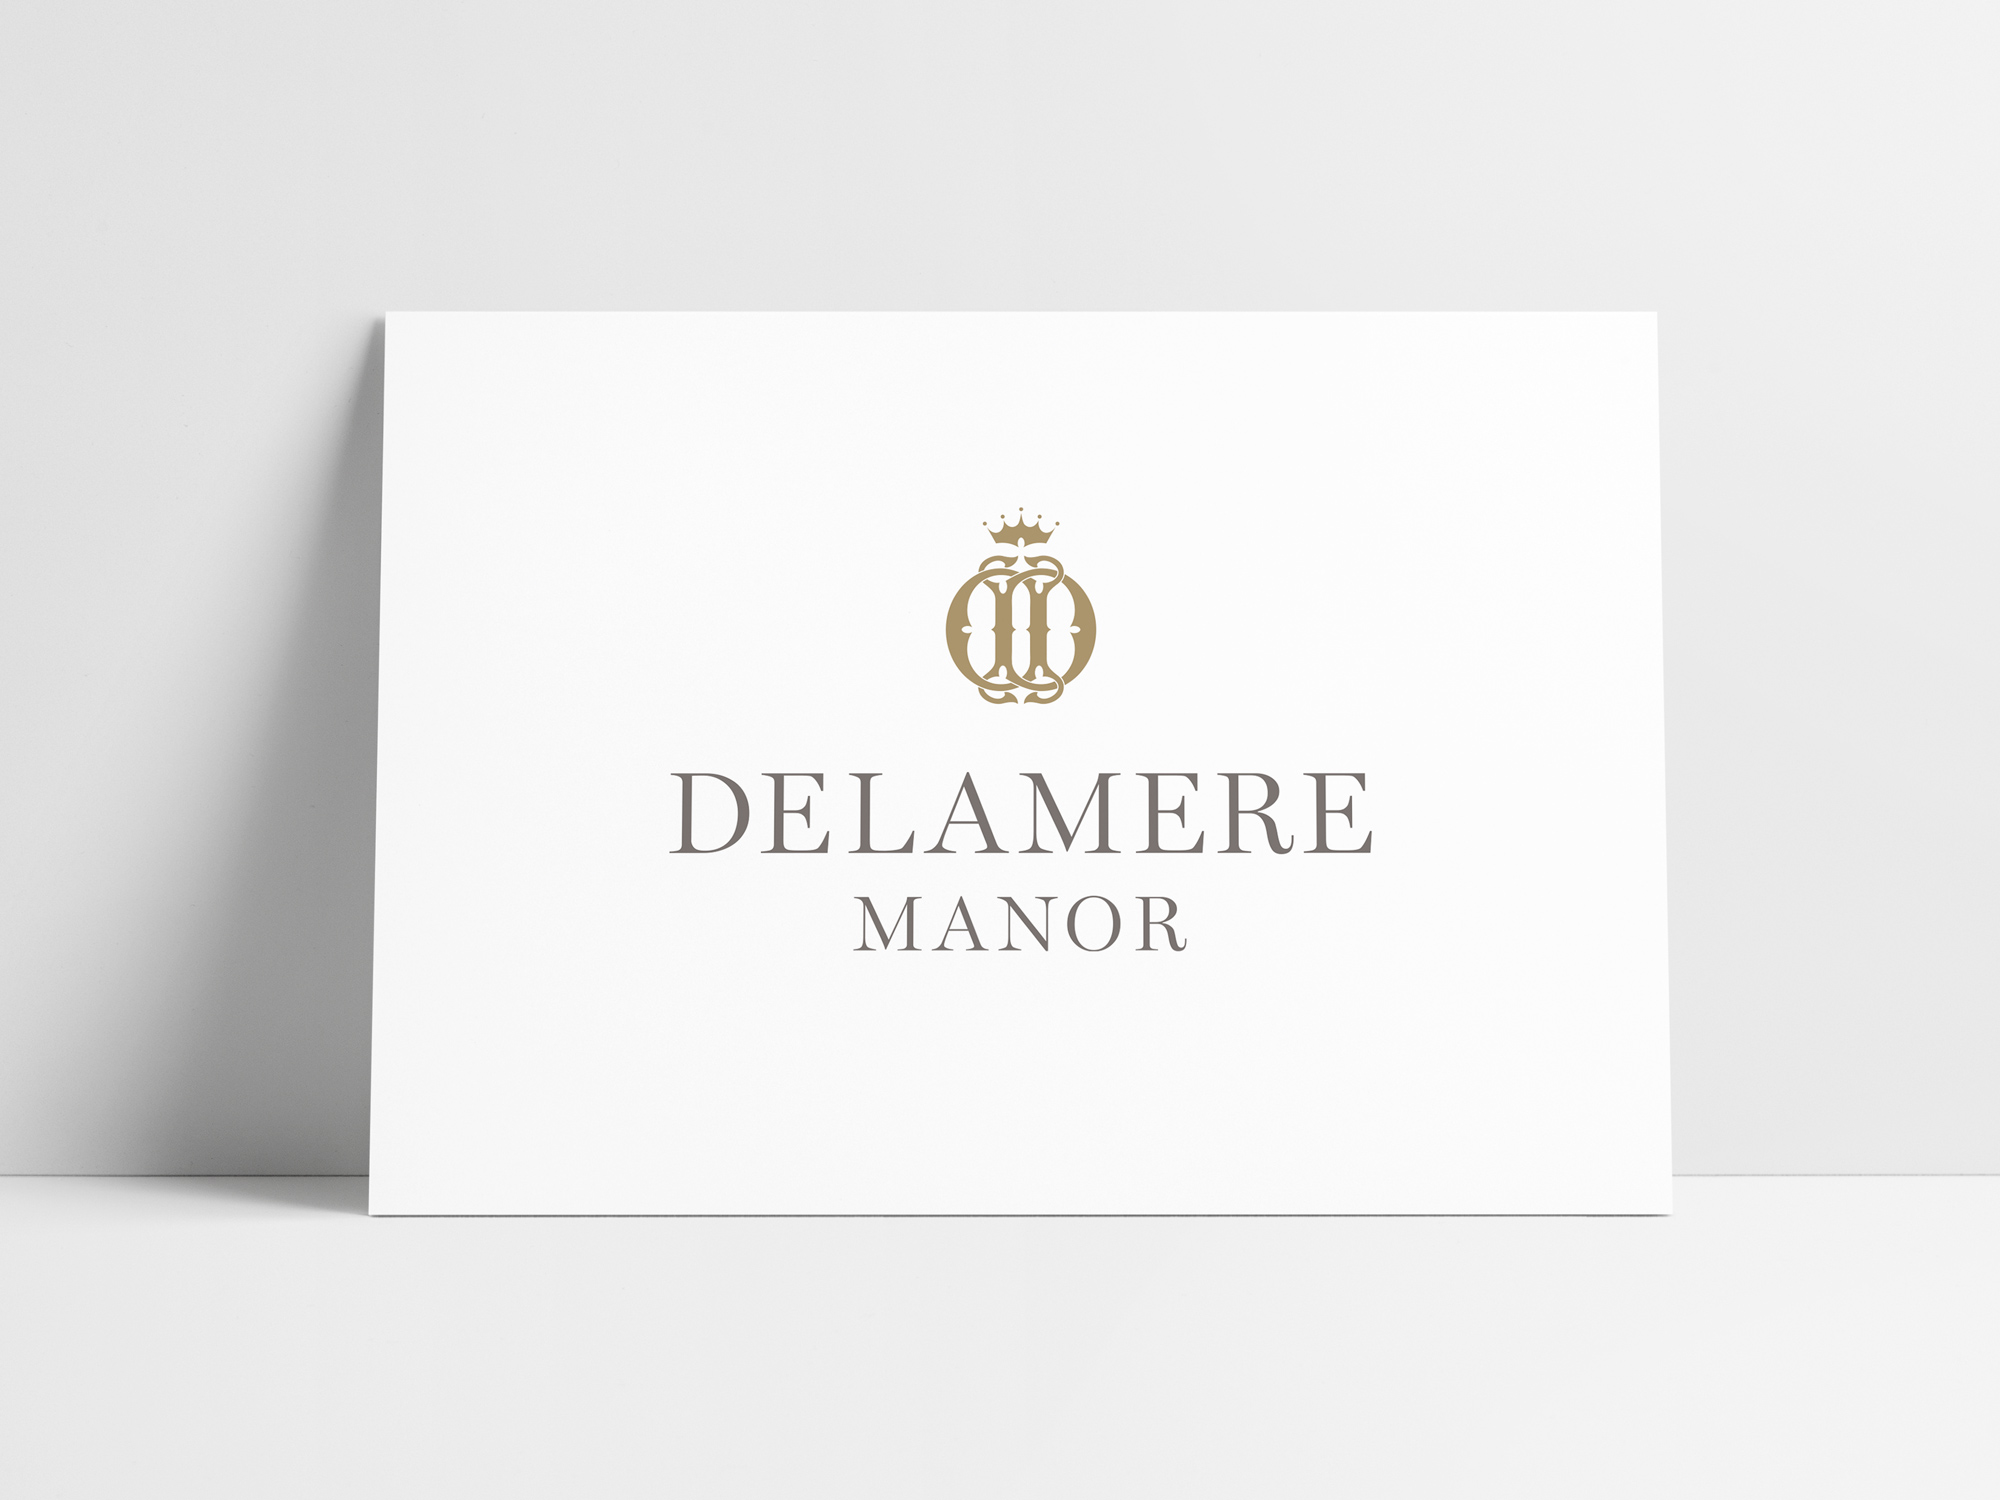 Delamere Manor